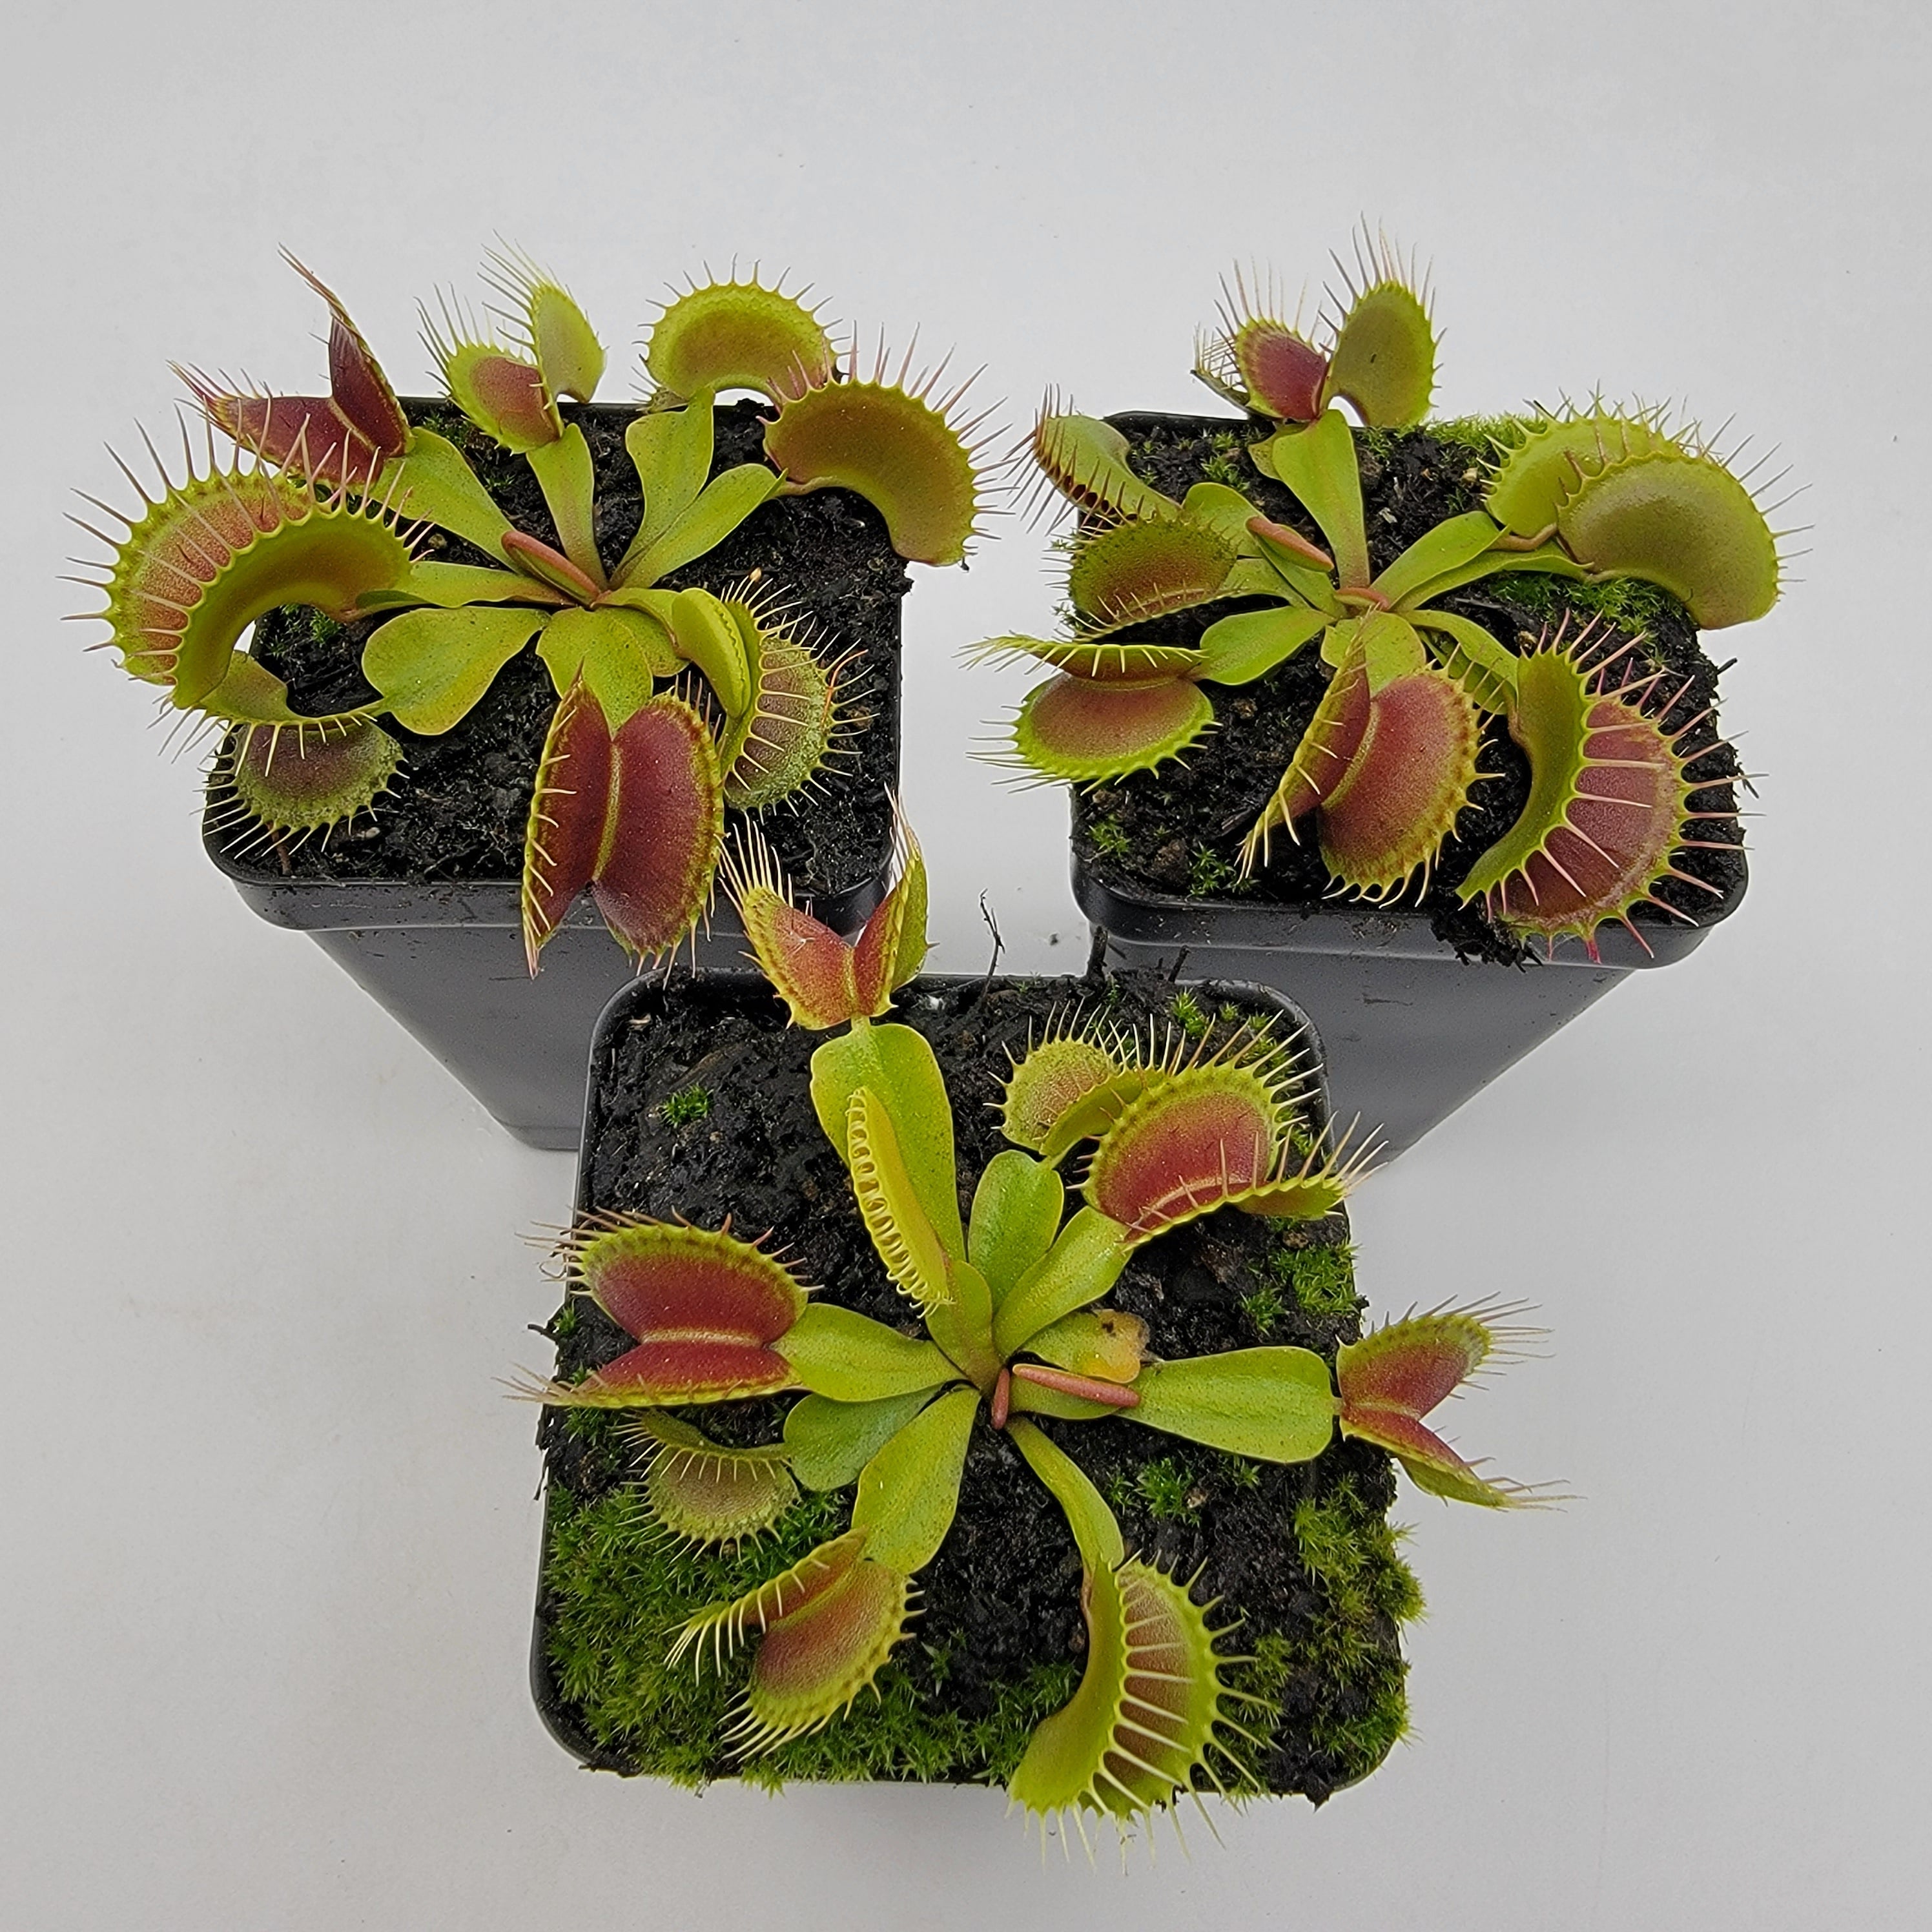 Venus flytrap (Dionaea muscipula)  'Low Giant' x 'Jaws smiley' - Rainbow Carnivorous Plants LLC